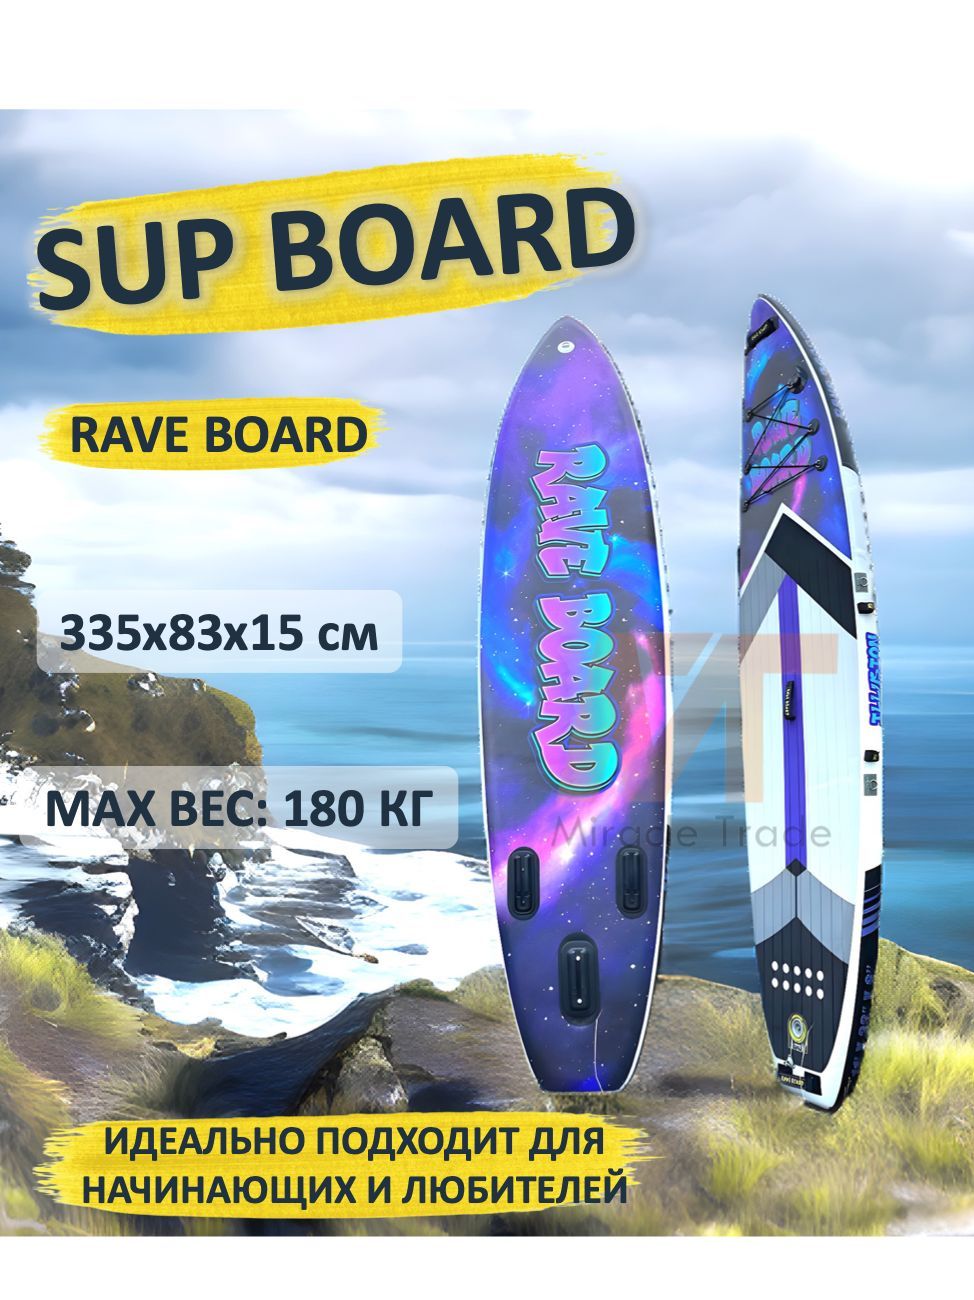 Rave board. Rave Board sup. Сапборд Rave Board. САП САП доска Rave 06а. САП Rave Board описание.